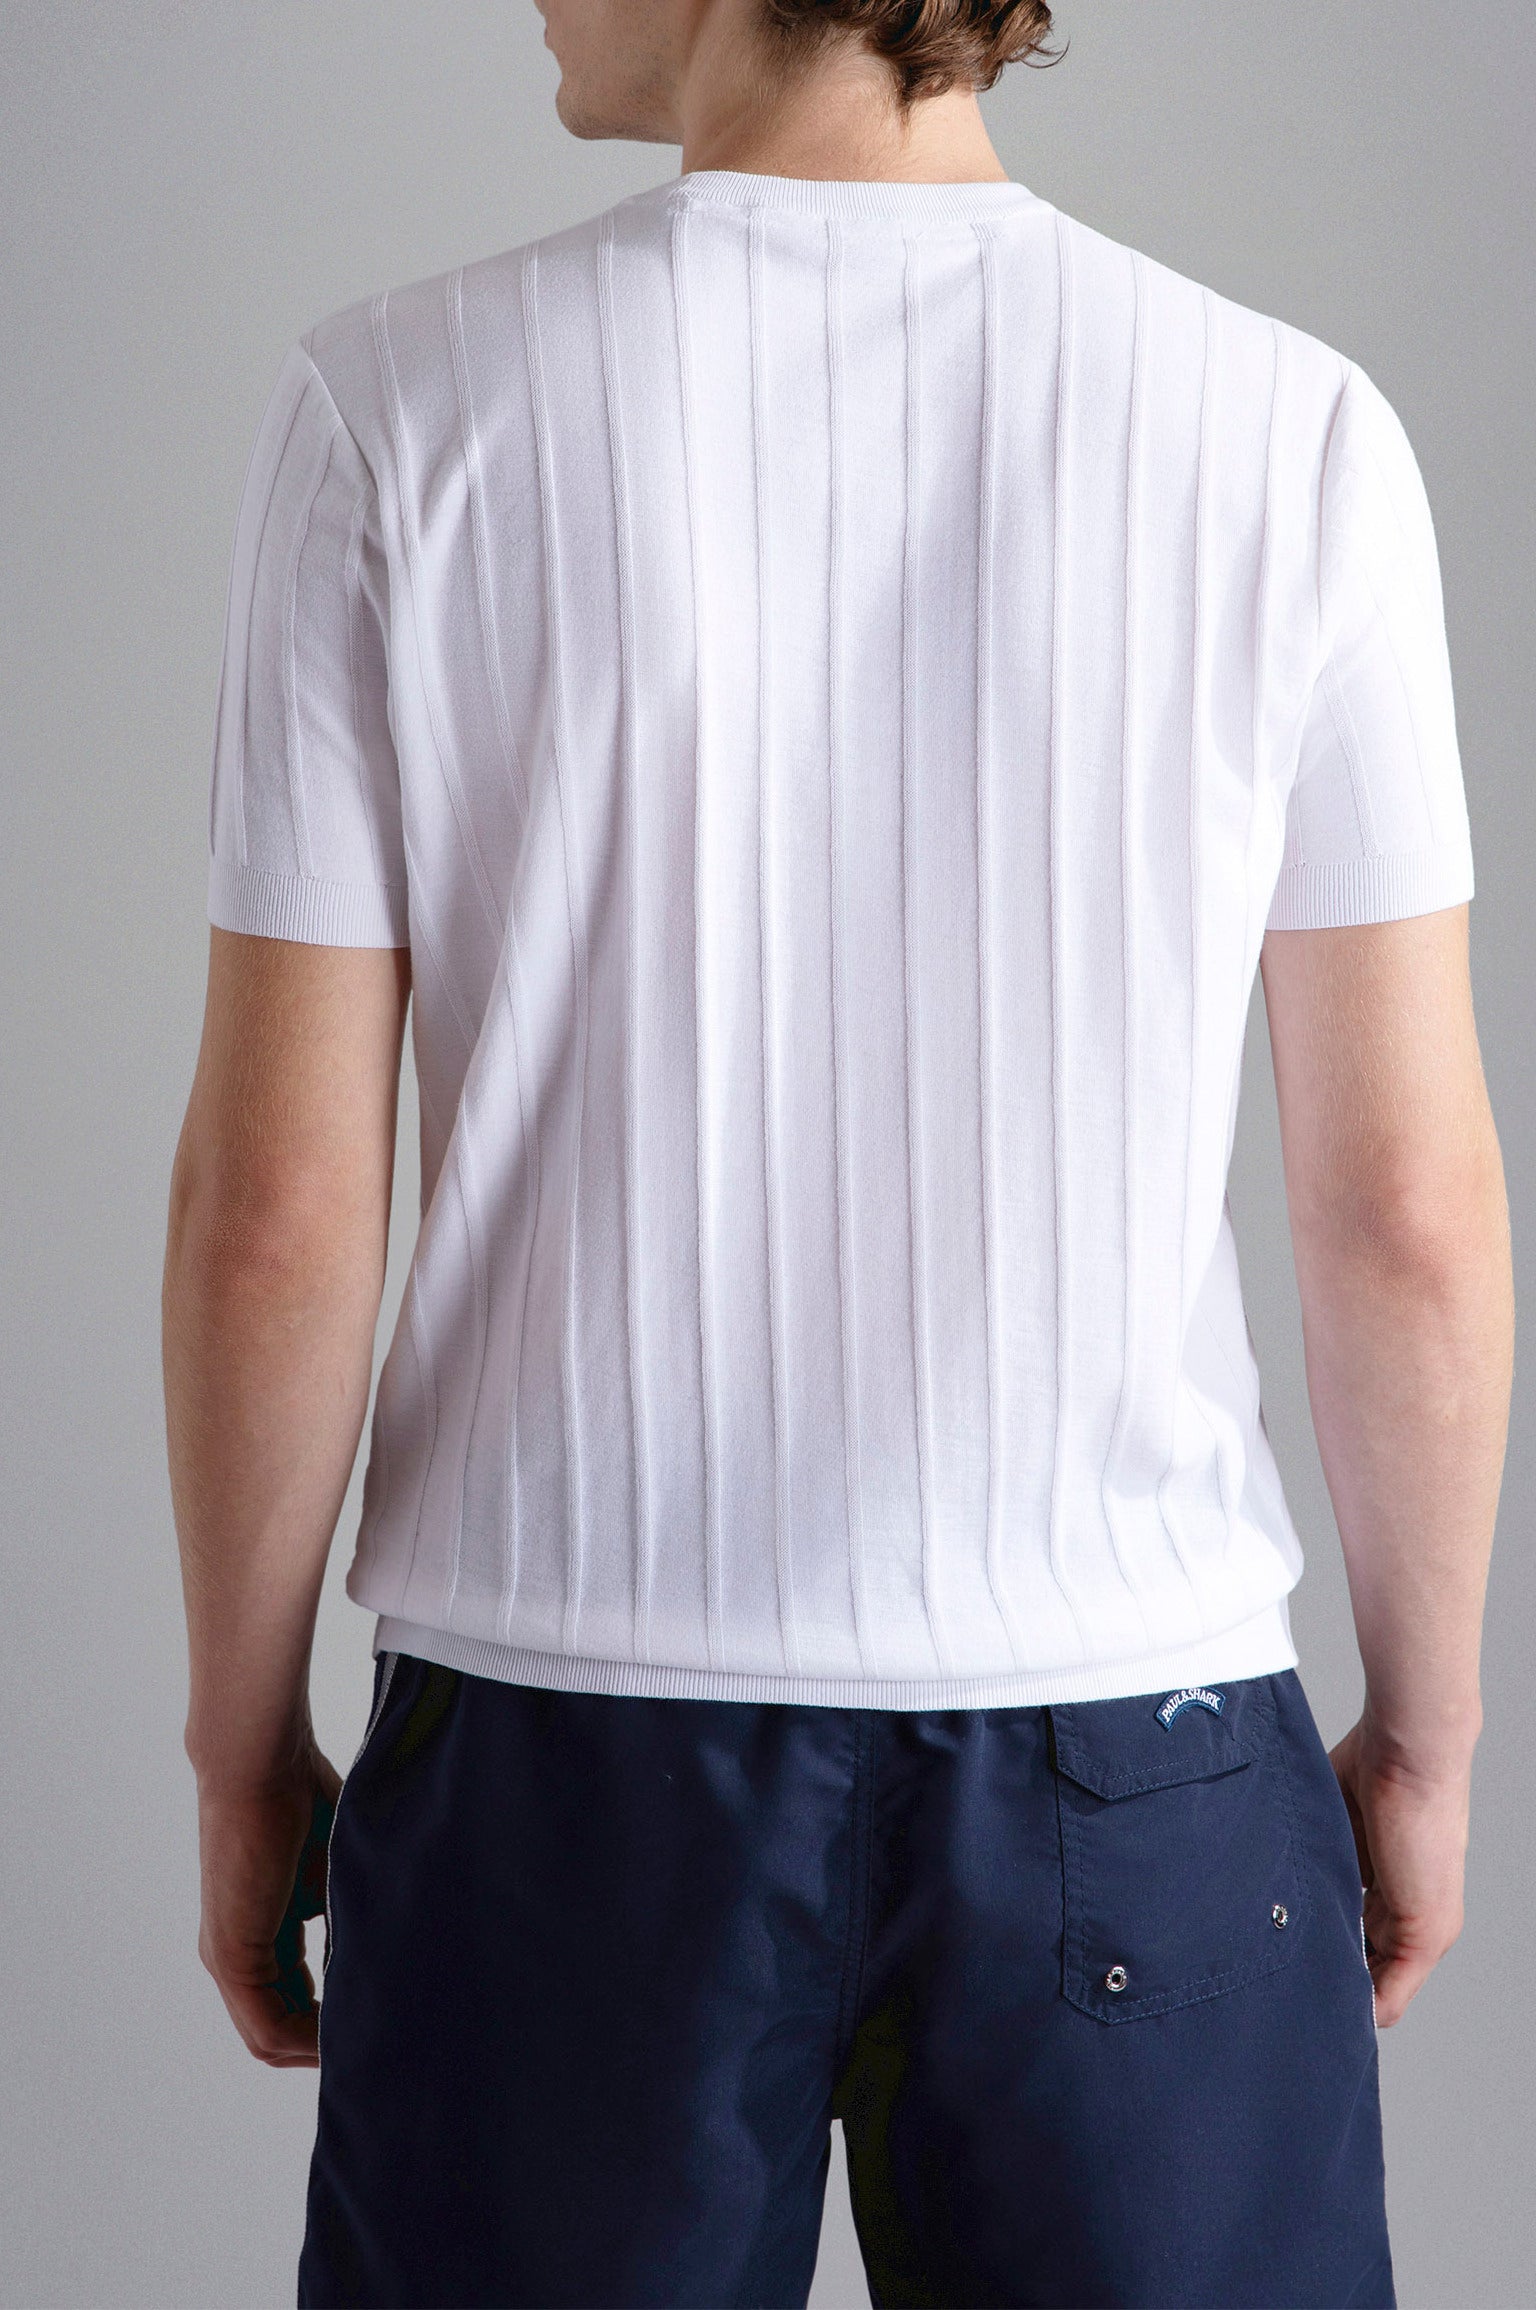 PAUL & SHARK T-Shirt Uomo Girocollo Cotone Righe-Bianco